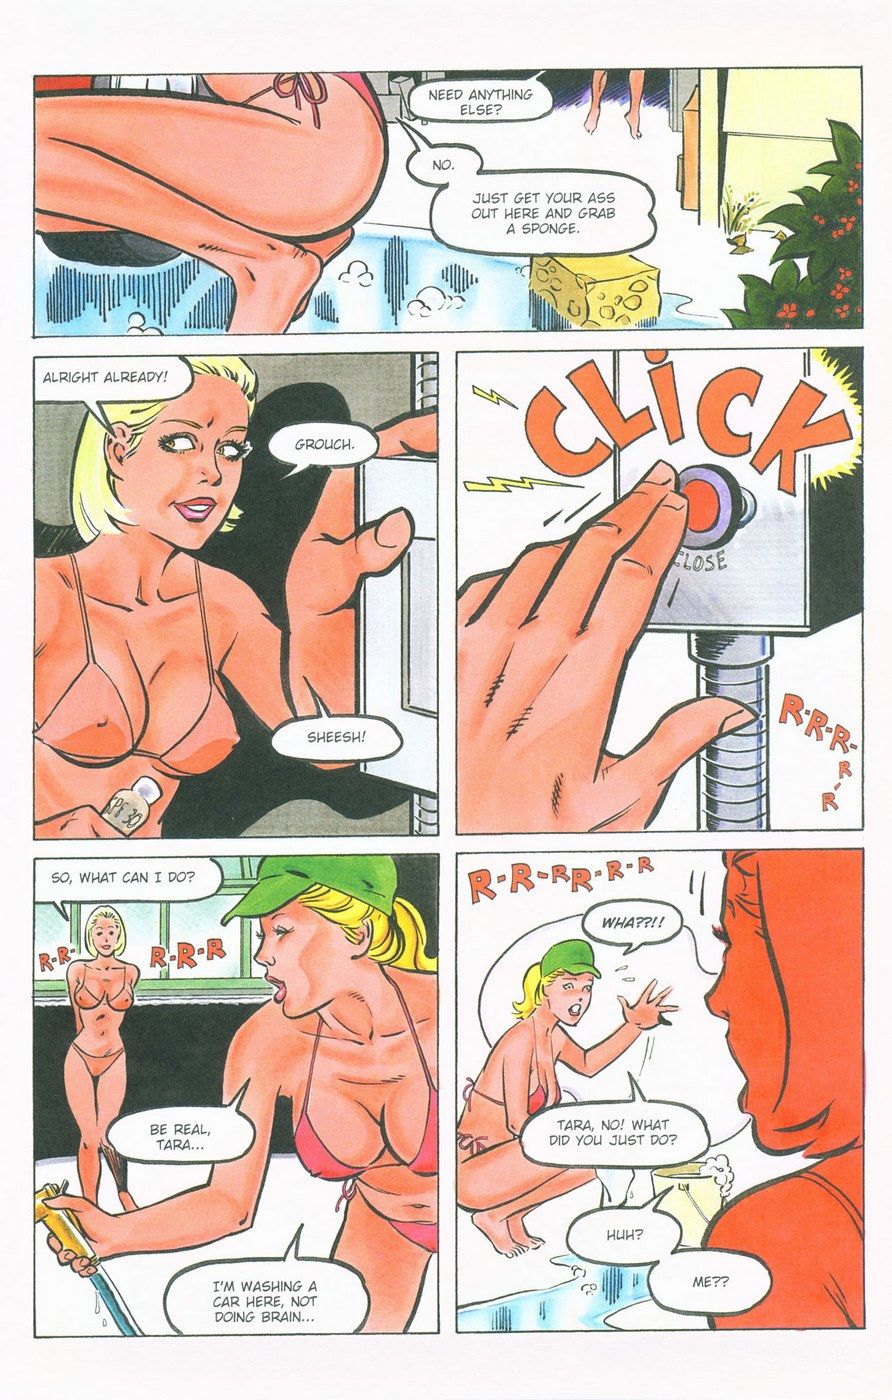 Hot Moms 9 - Rebecca, Western Milf Sex page 6